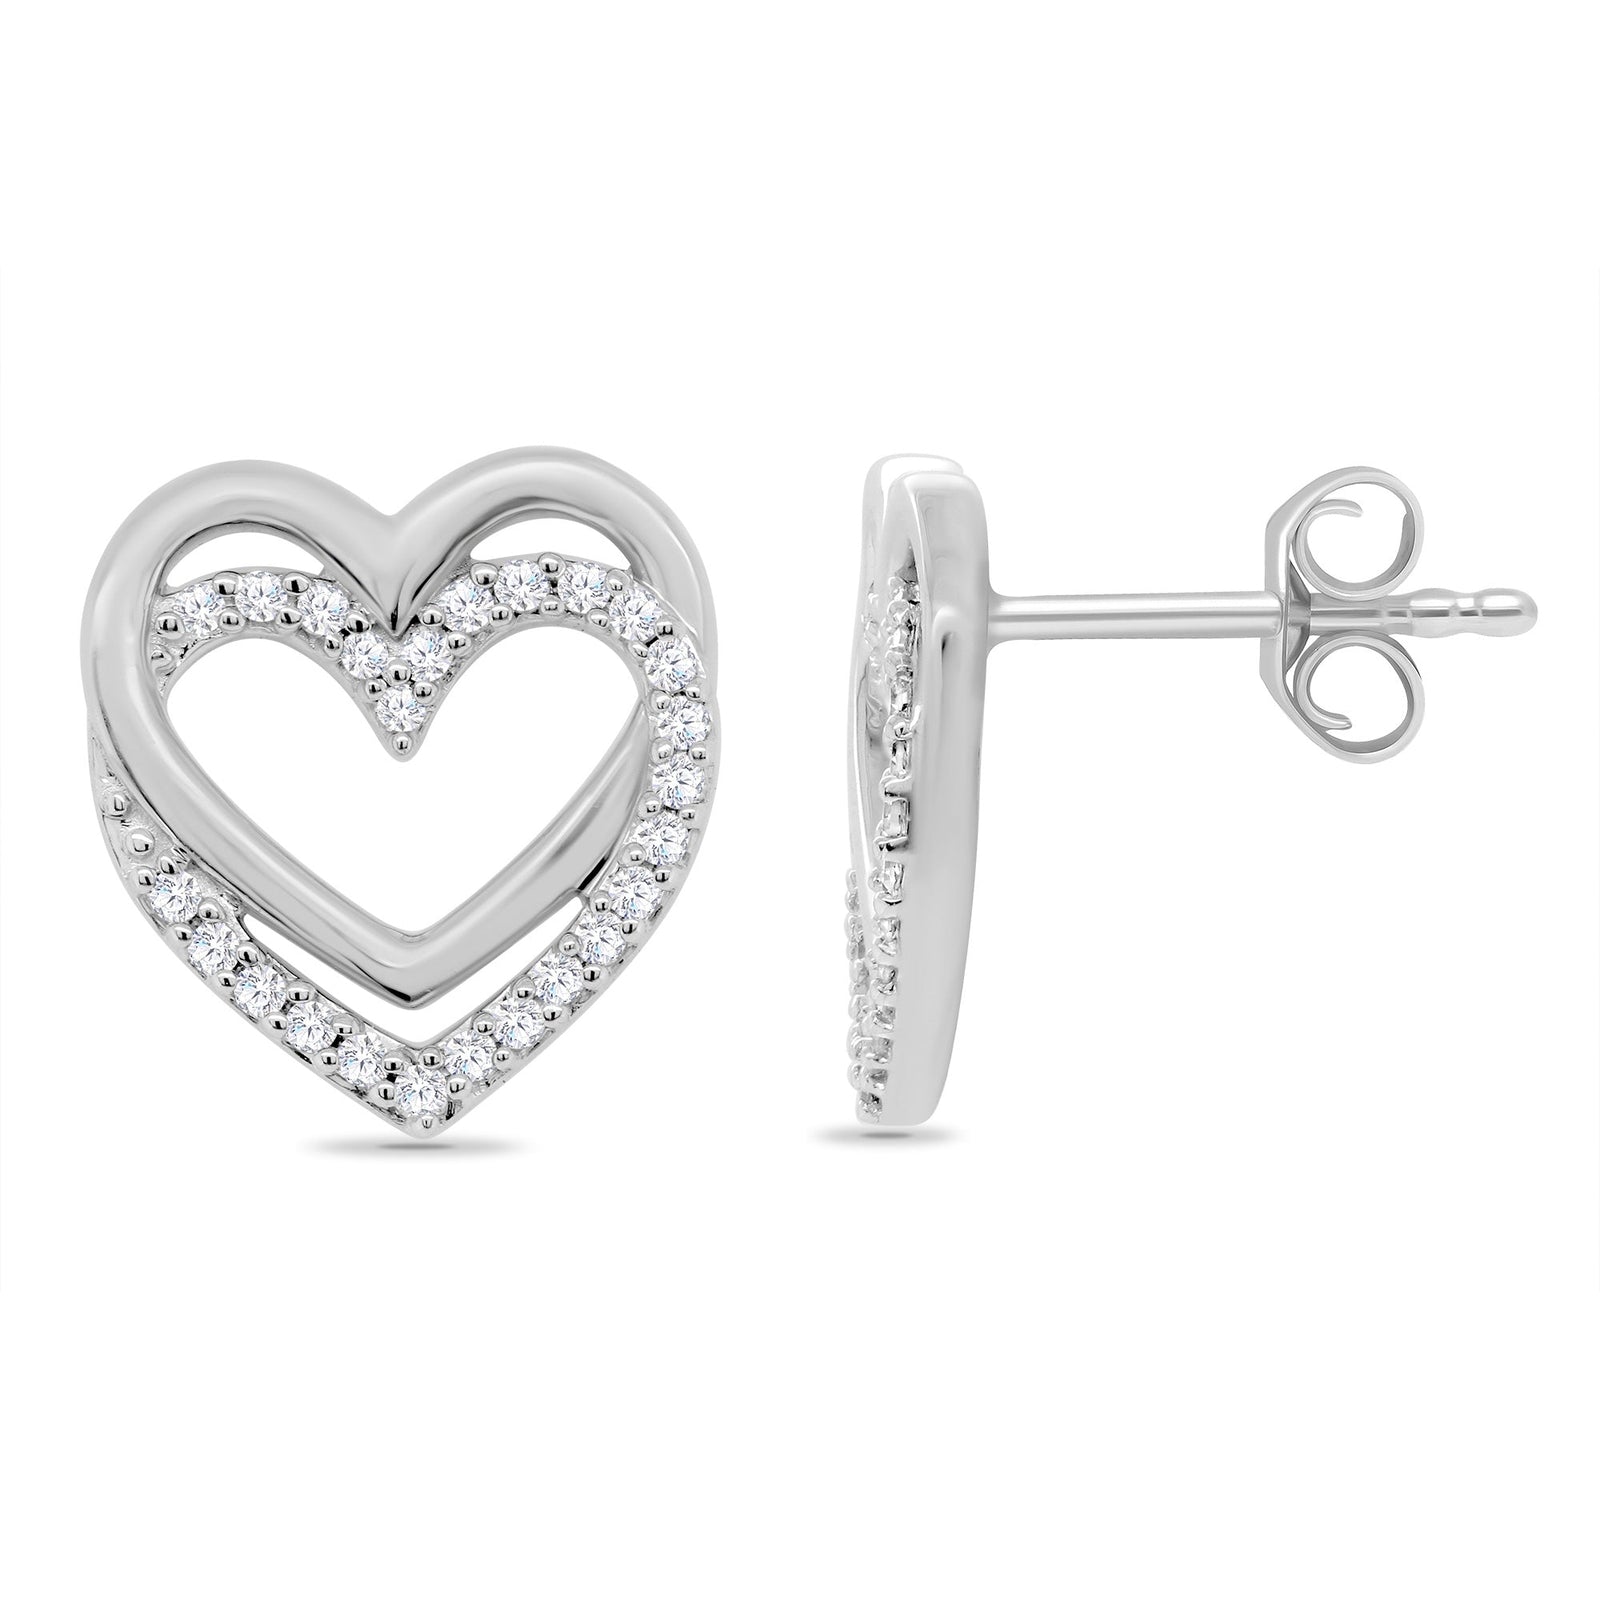 9ct white gold double heart diamond studs earrings 0.20ct